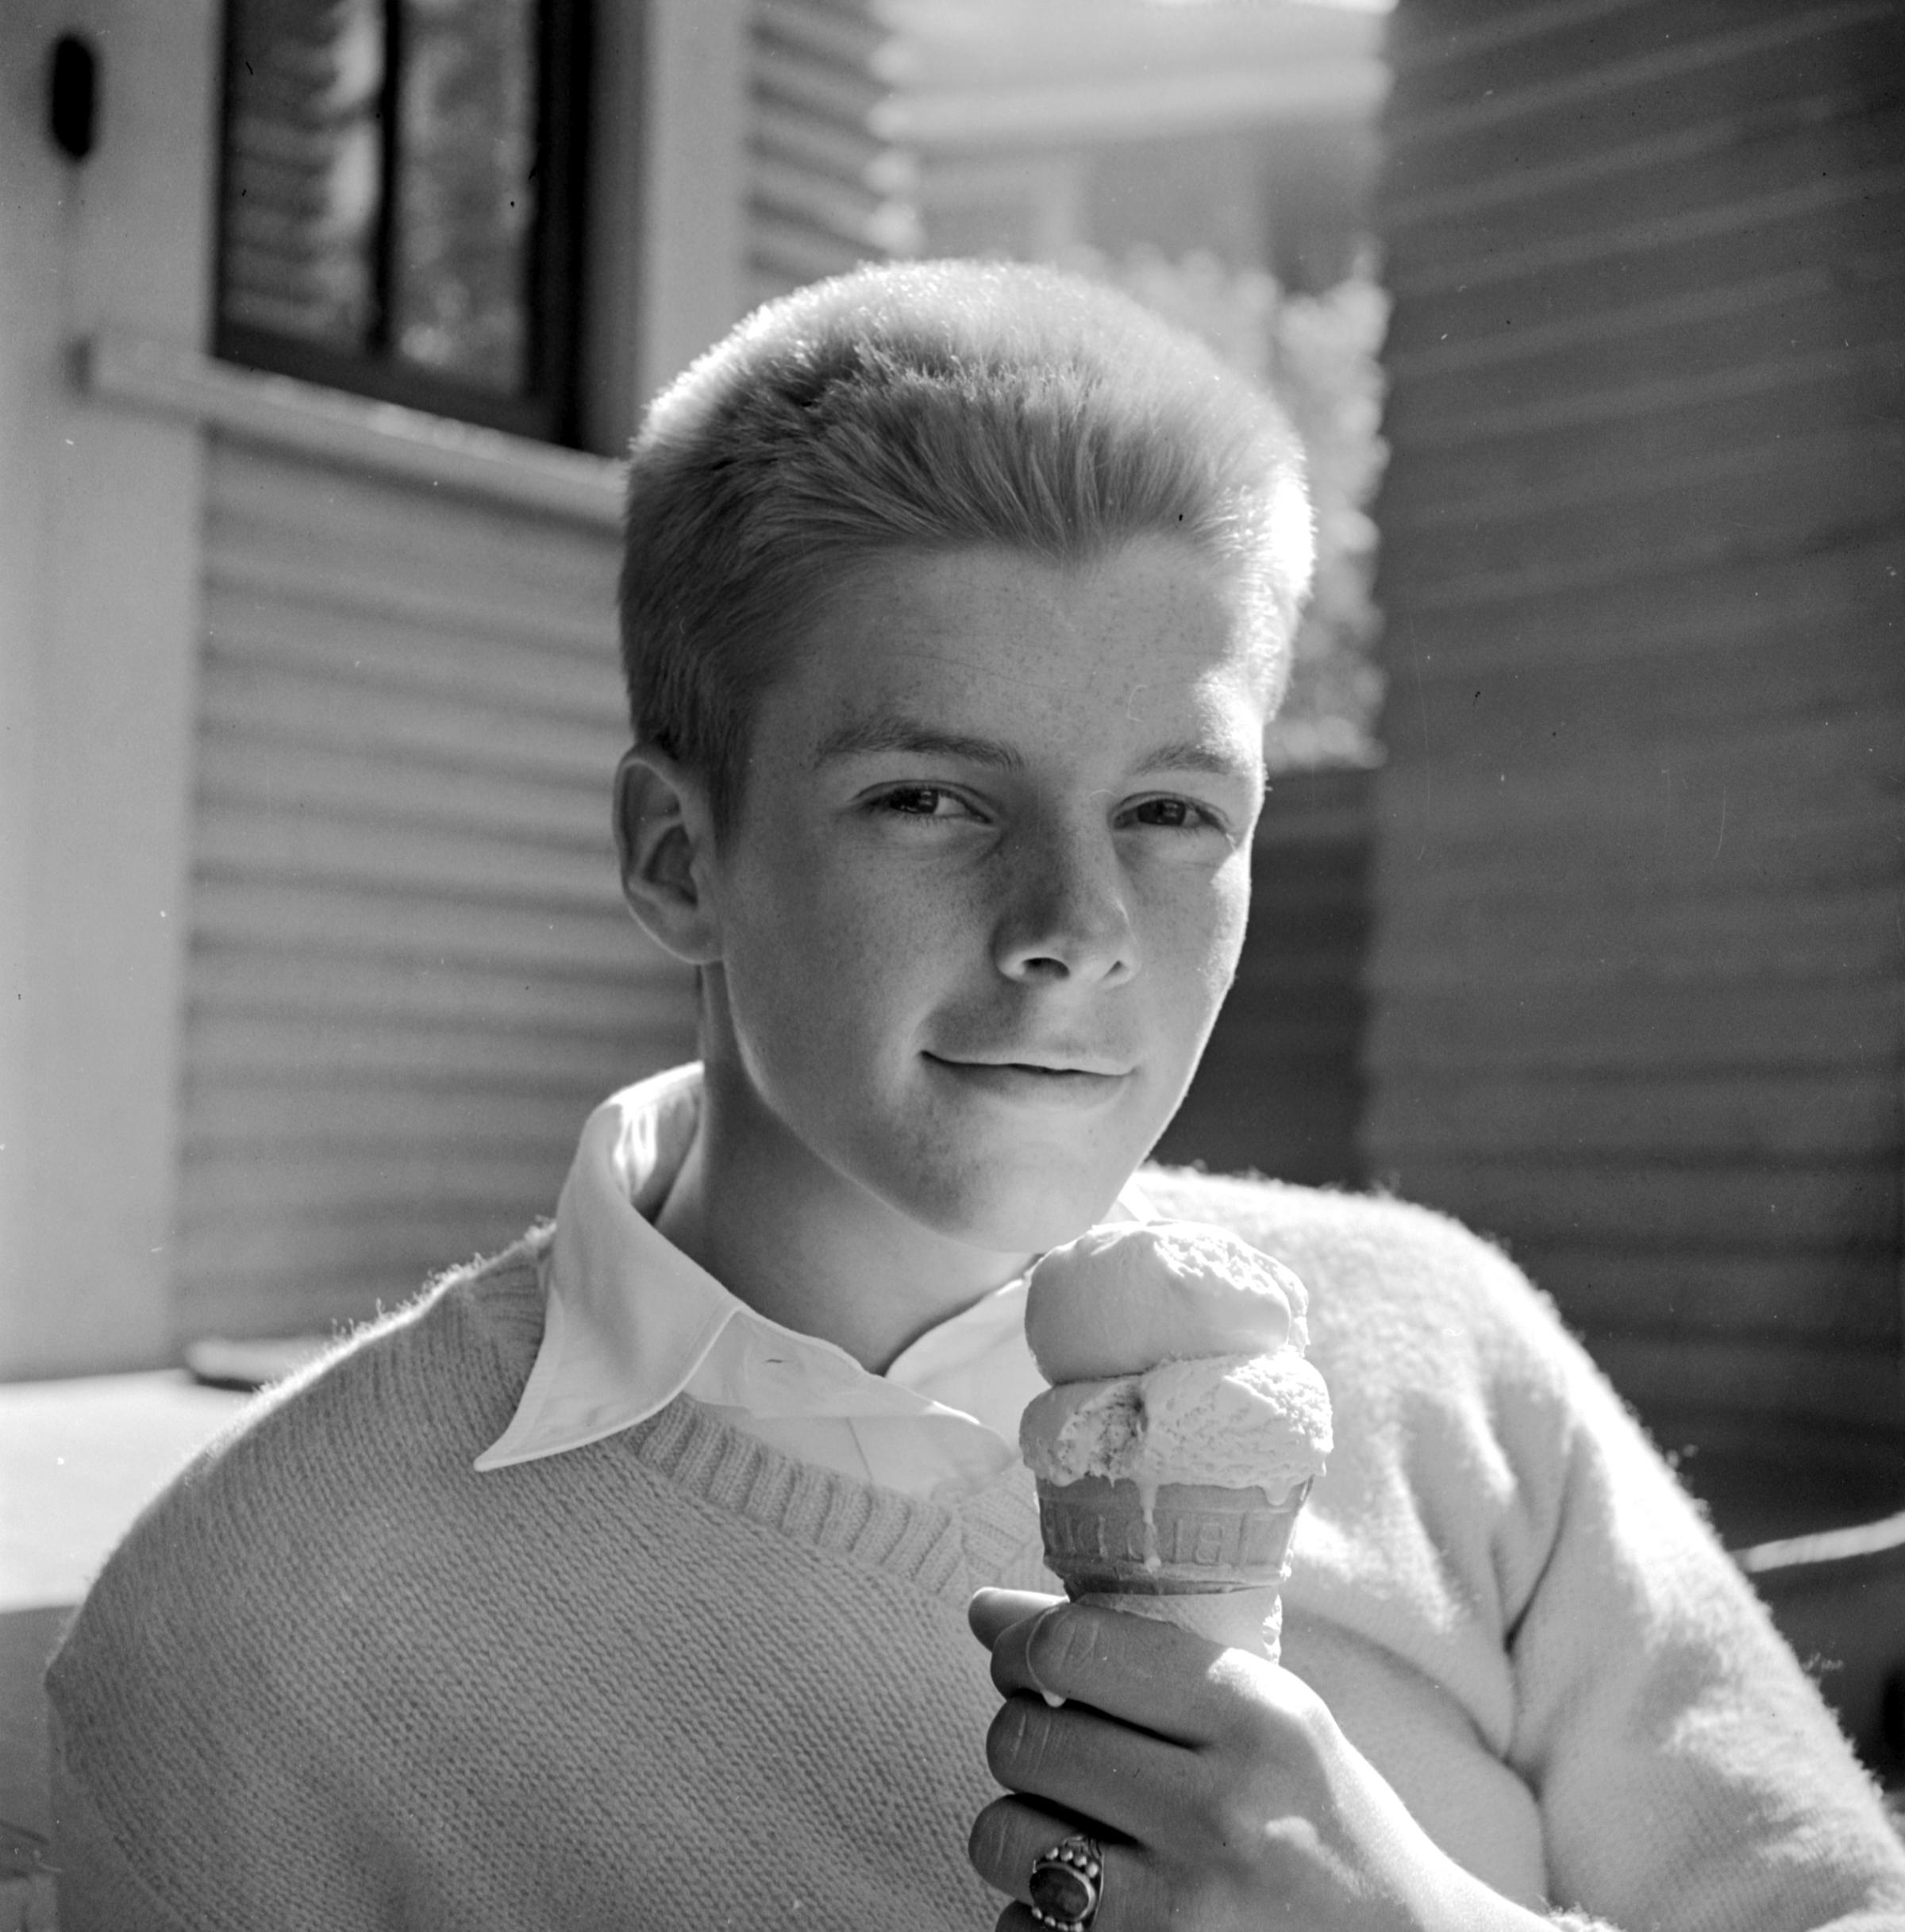 A teenage boy in Iowa eating ice cream, 1945.